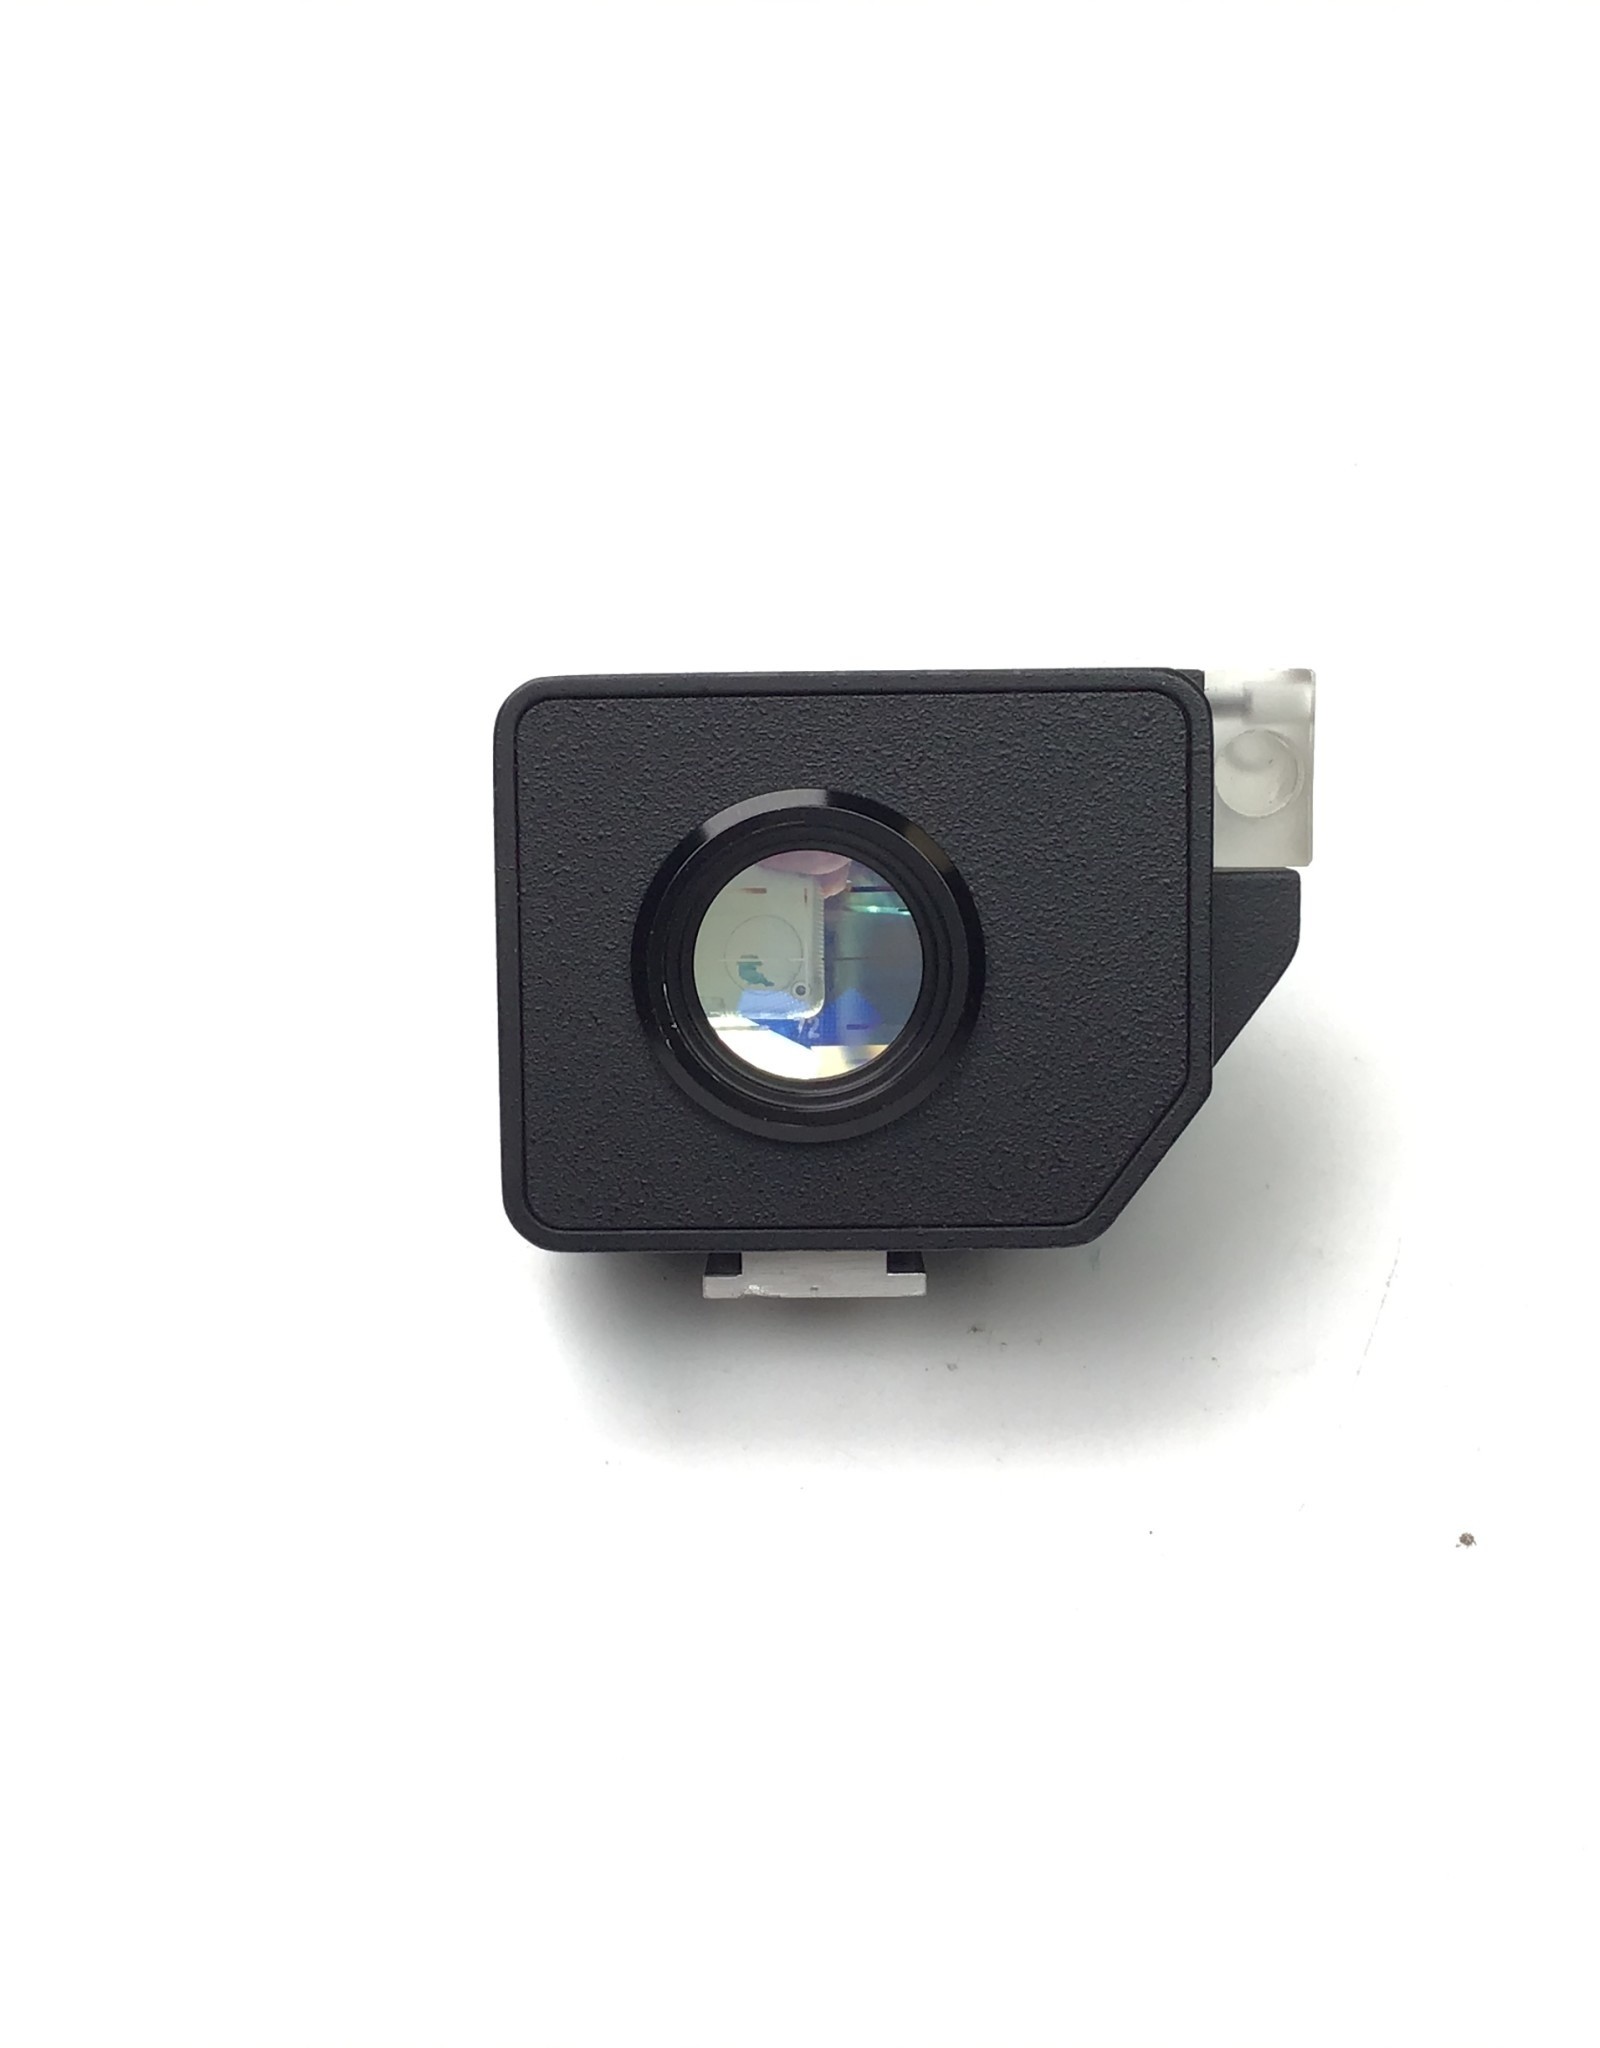 Linhof Linhof Technorama 72mm f5.6 XL Super Angulon Lens w/ Finder Used Good